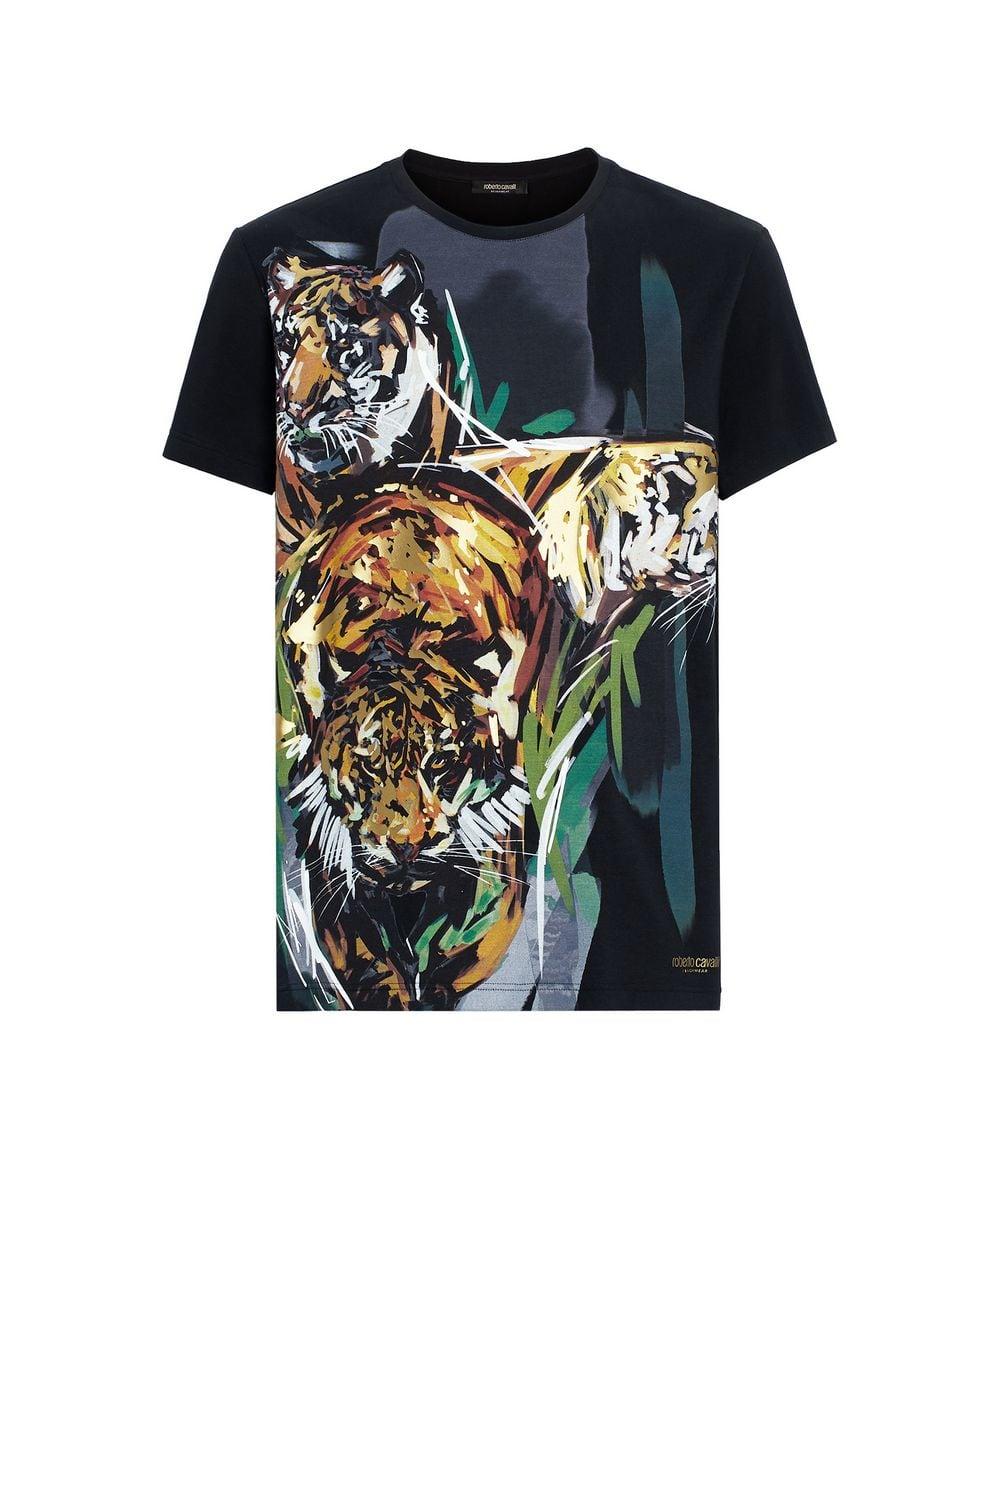 Roberto Cavalli Tiger Print T-shirt in Black for Men - Lyst